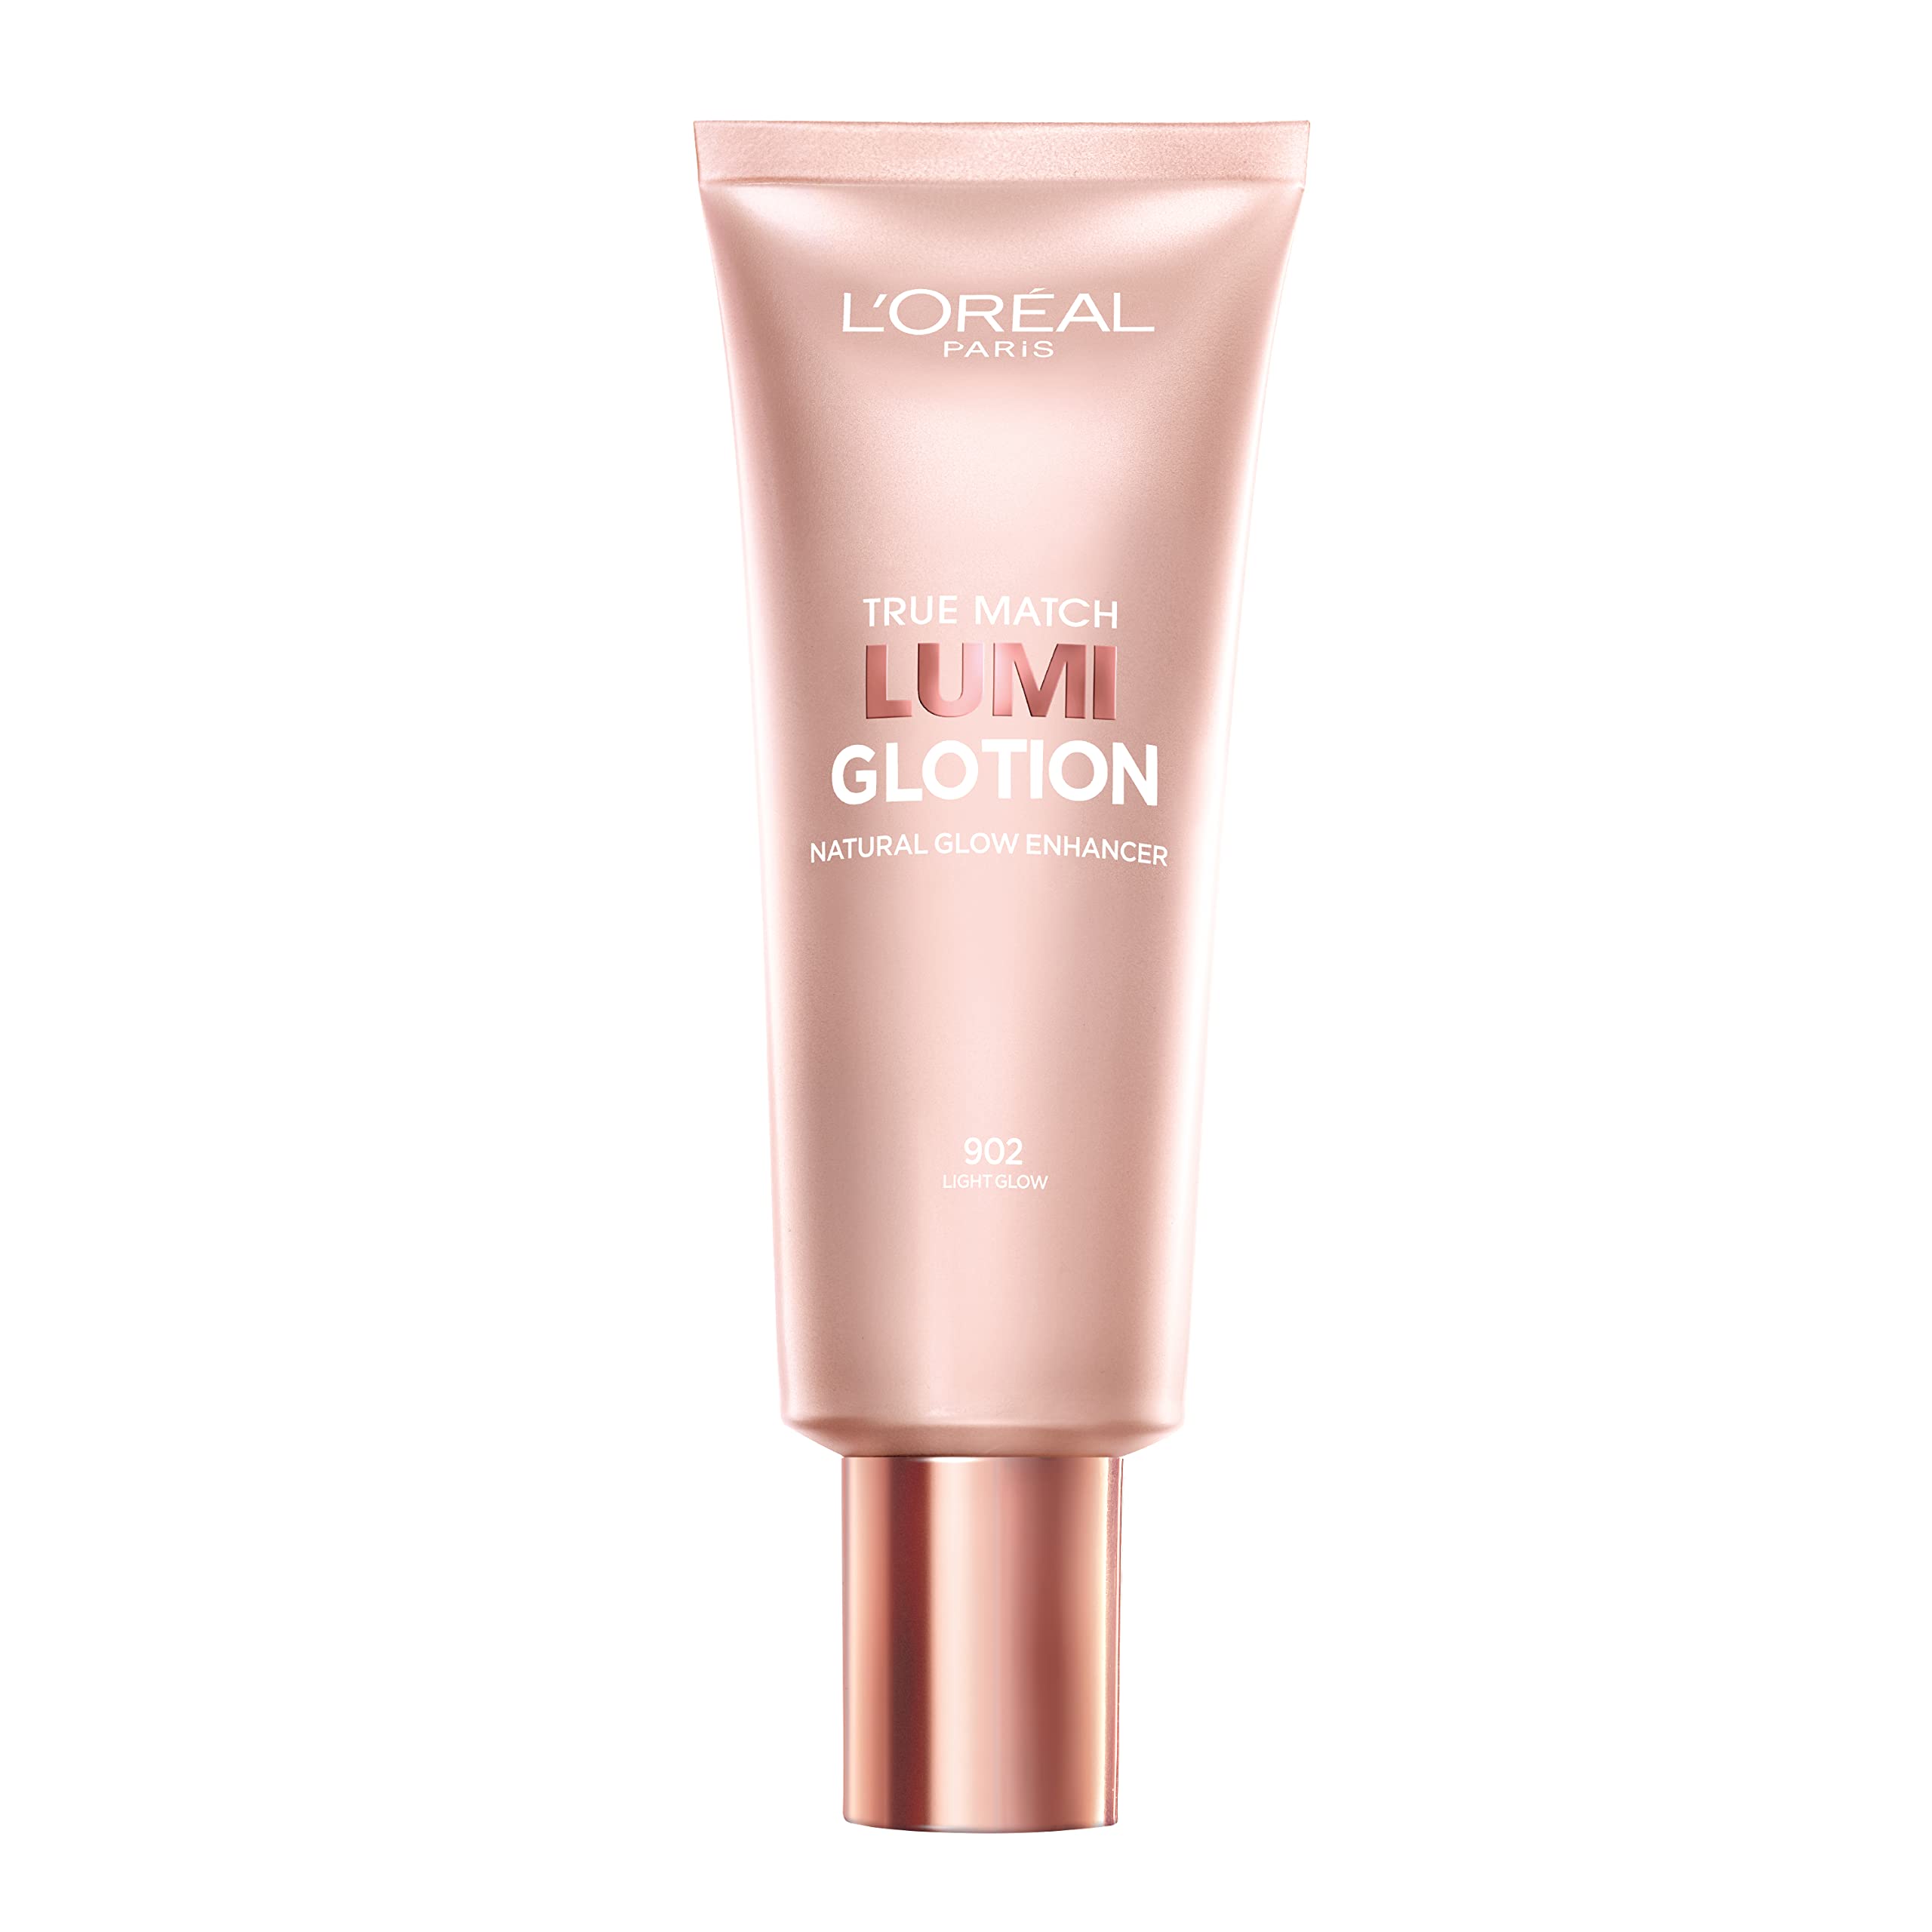 L’Oréal Paris Makeup True Match Lumi Glotion, Natural Glow Enhancer, Illuminator Highlighter Skin Tint, for an All Day Radiant Glow, Light, 1.35 Ounces